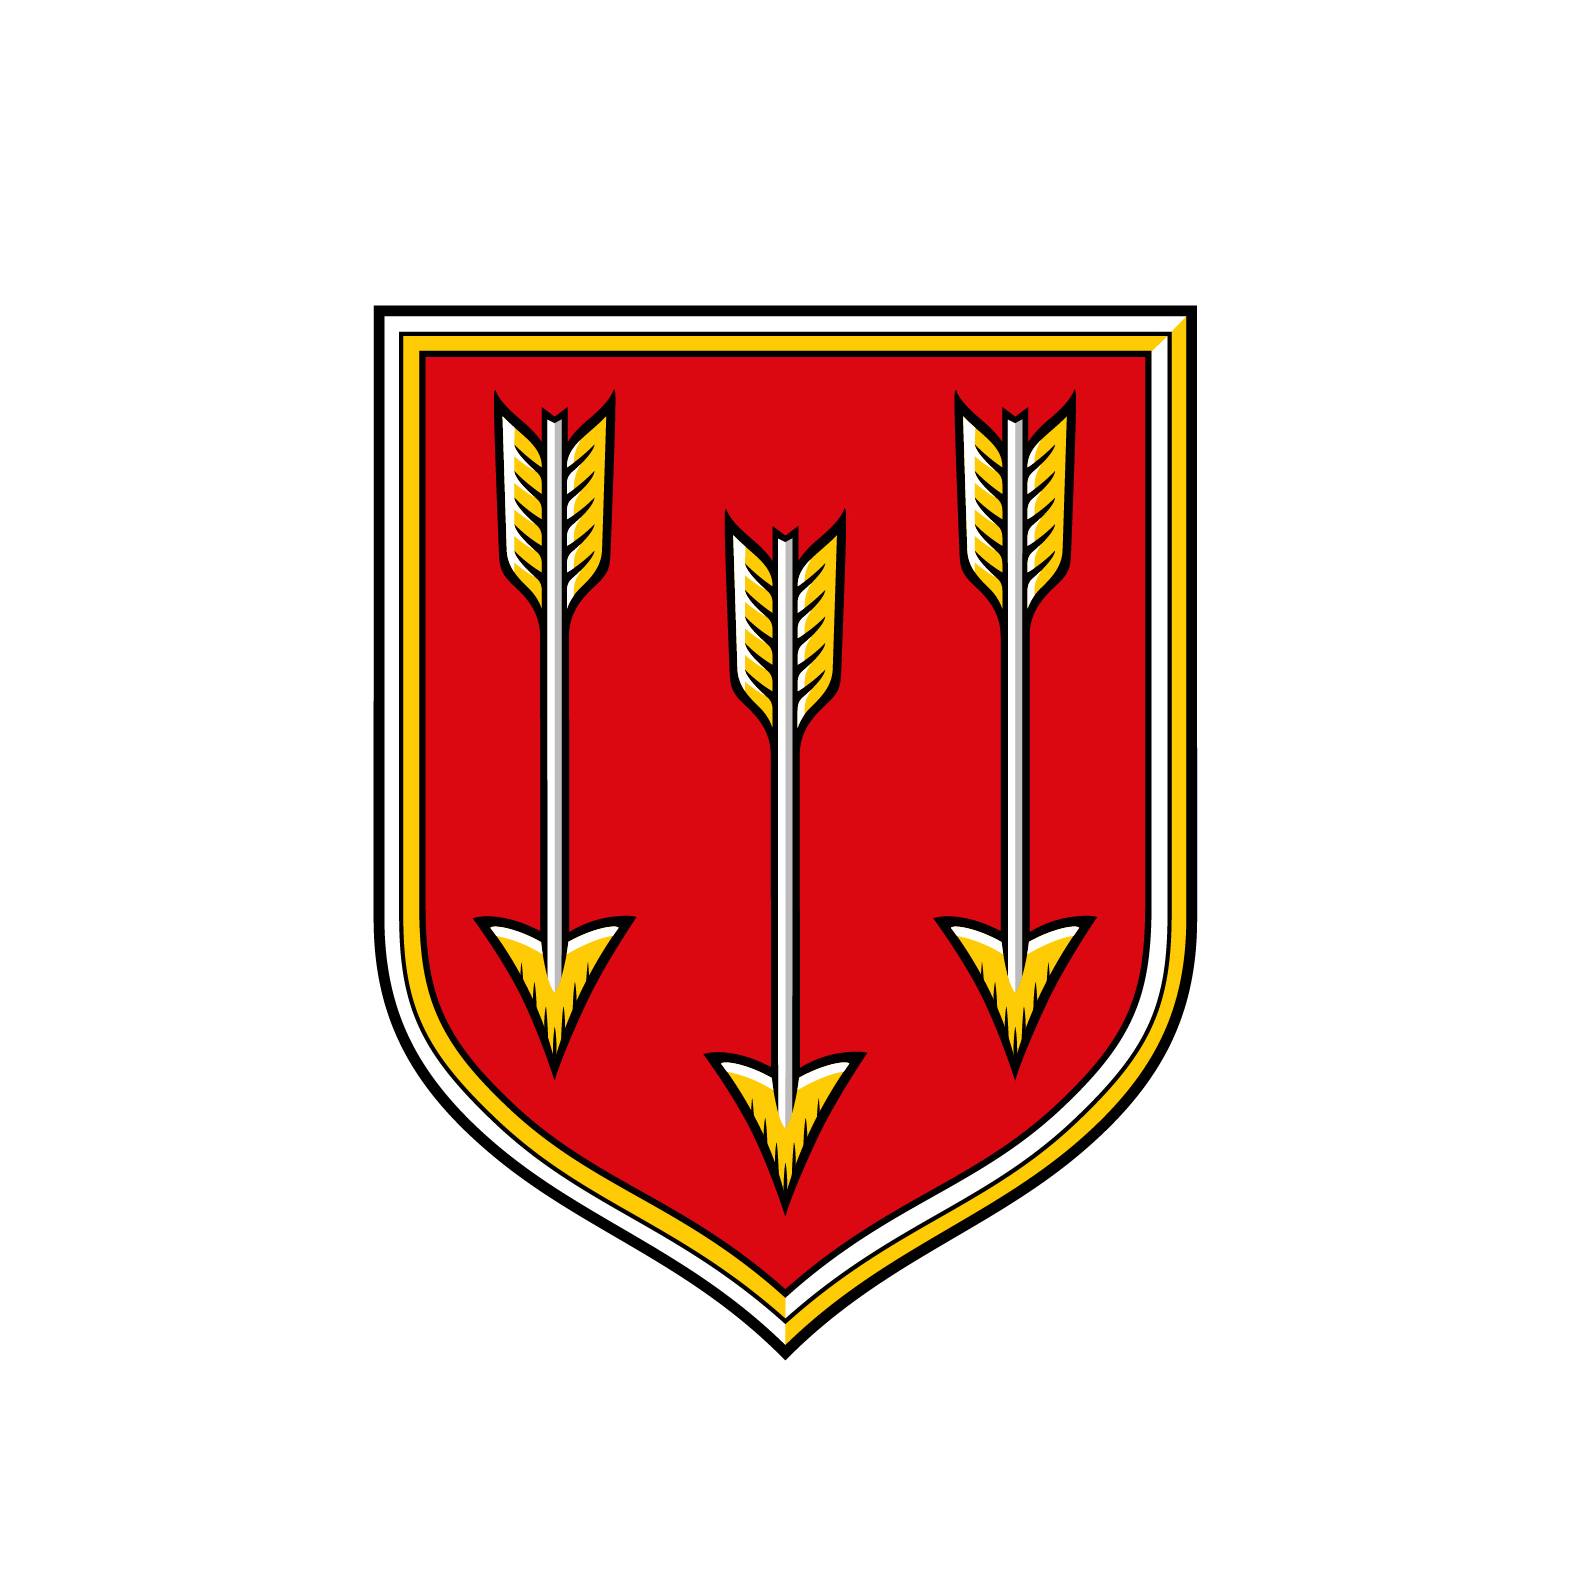 Bablake School & King Henry VIII's logo